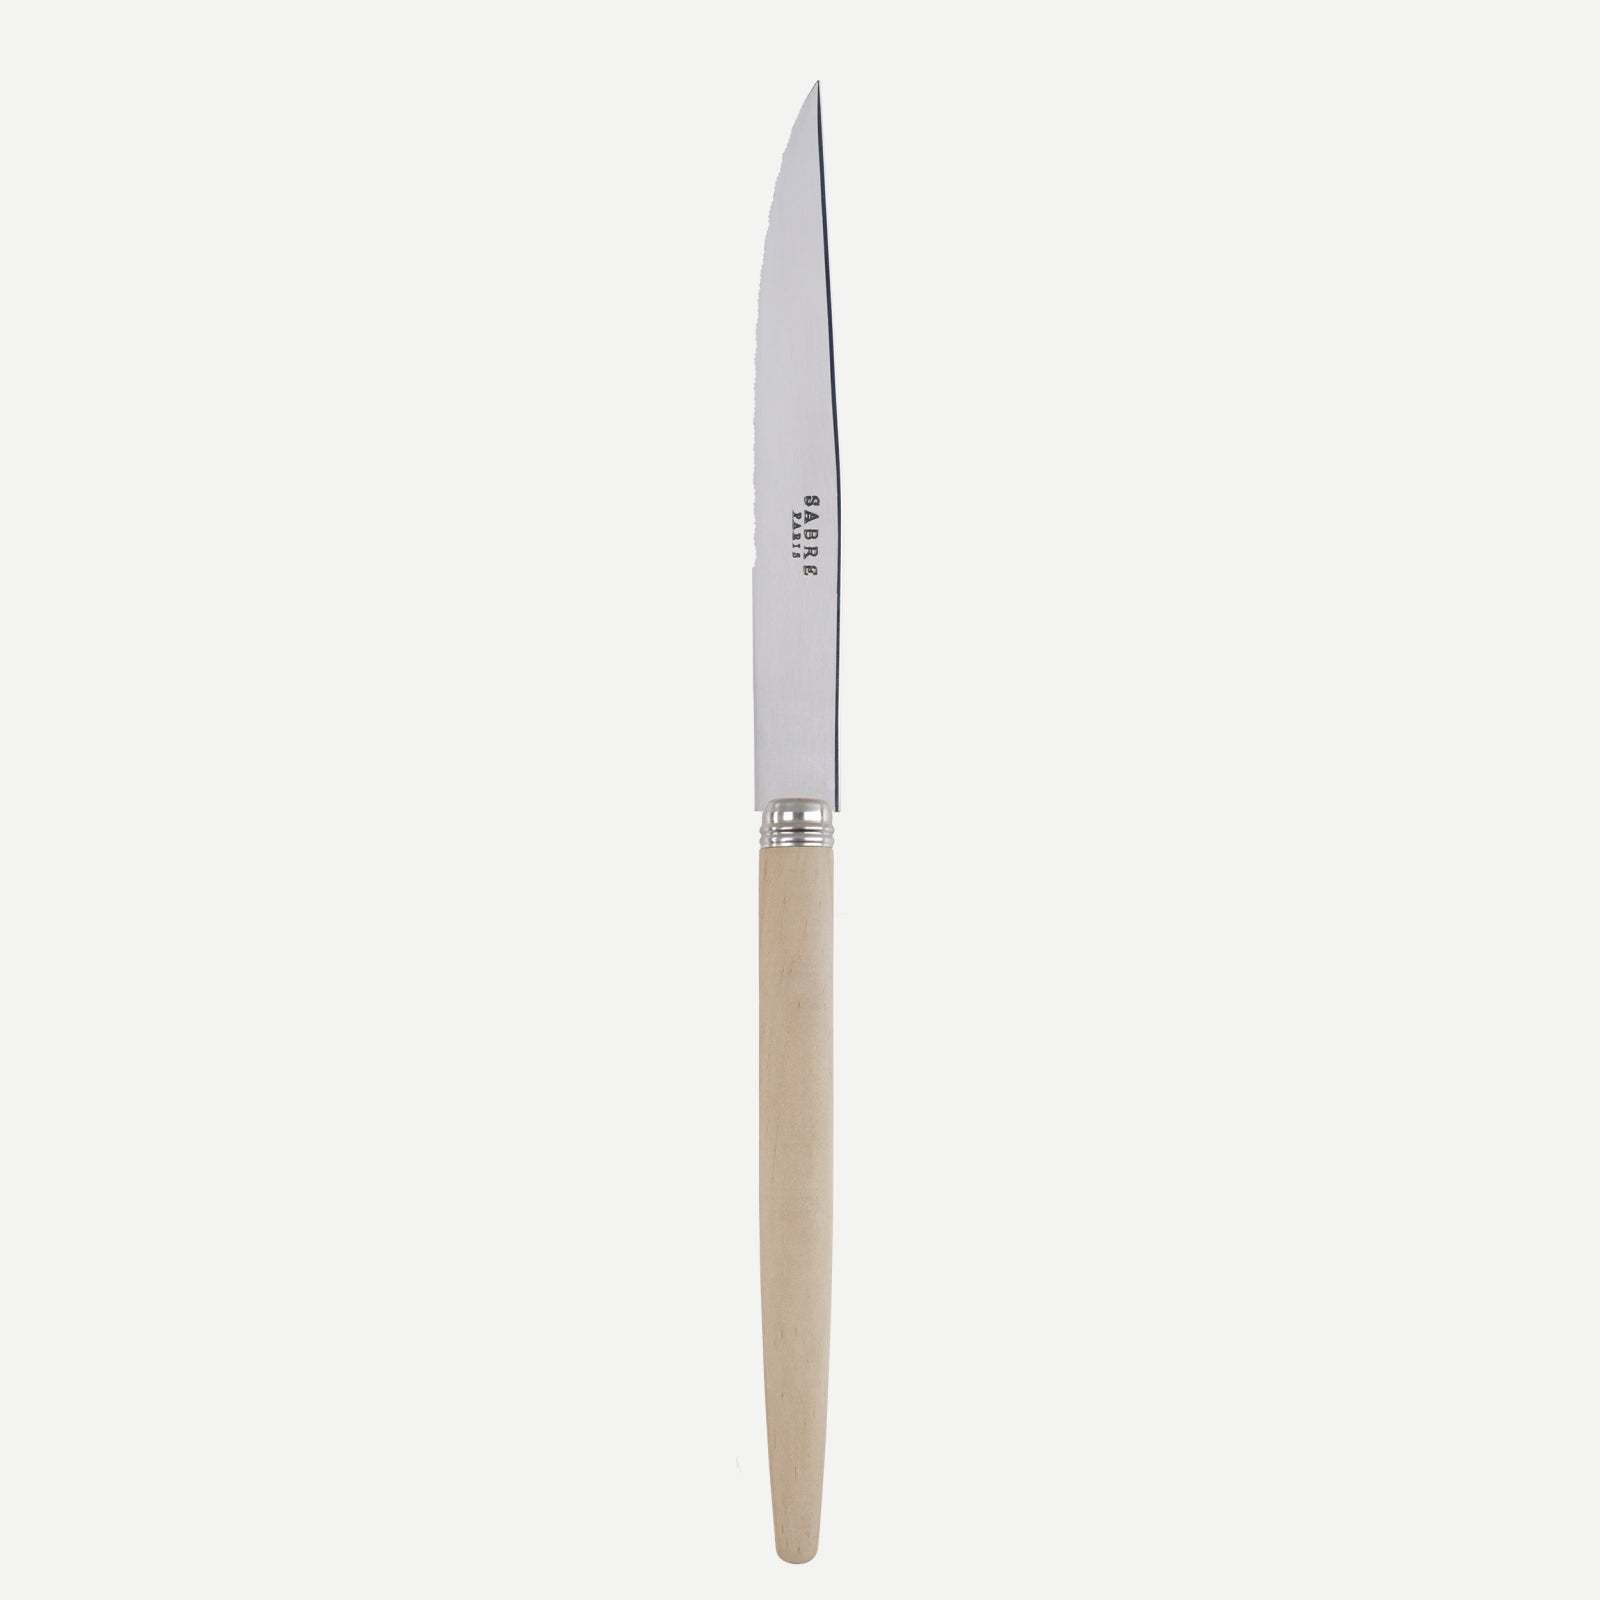 Steack knife - Jonc - Light wood